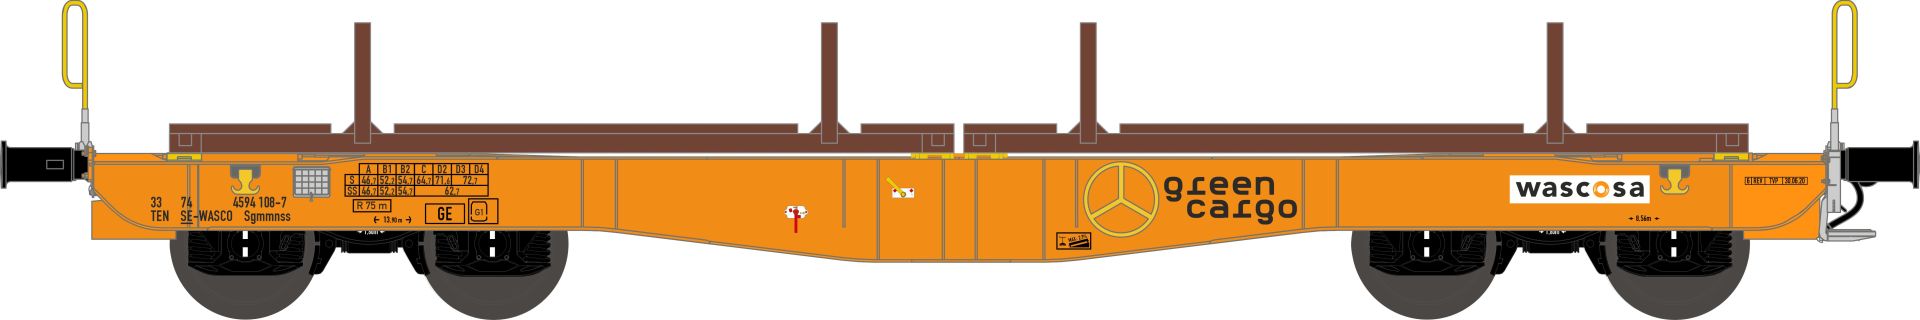 nme 560601 - Containertragwagen 41', WASCOSA - GREEN CARGO, Ep.VI